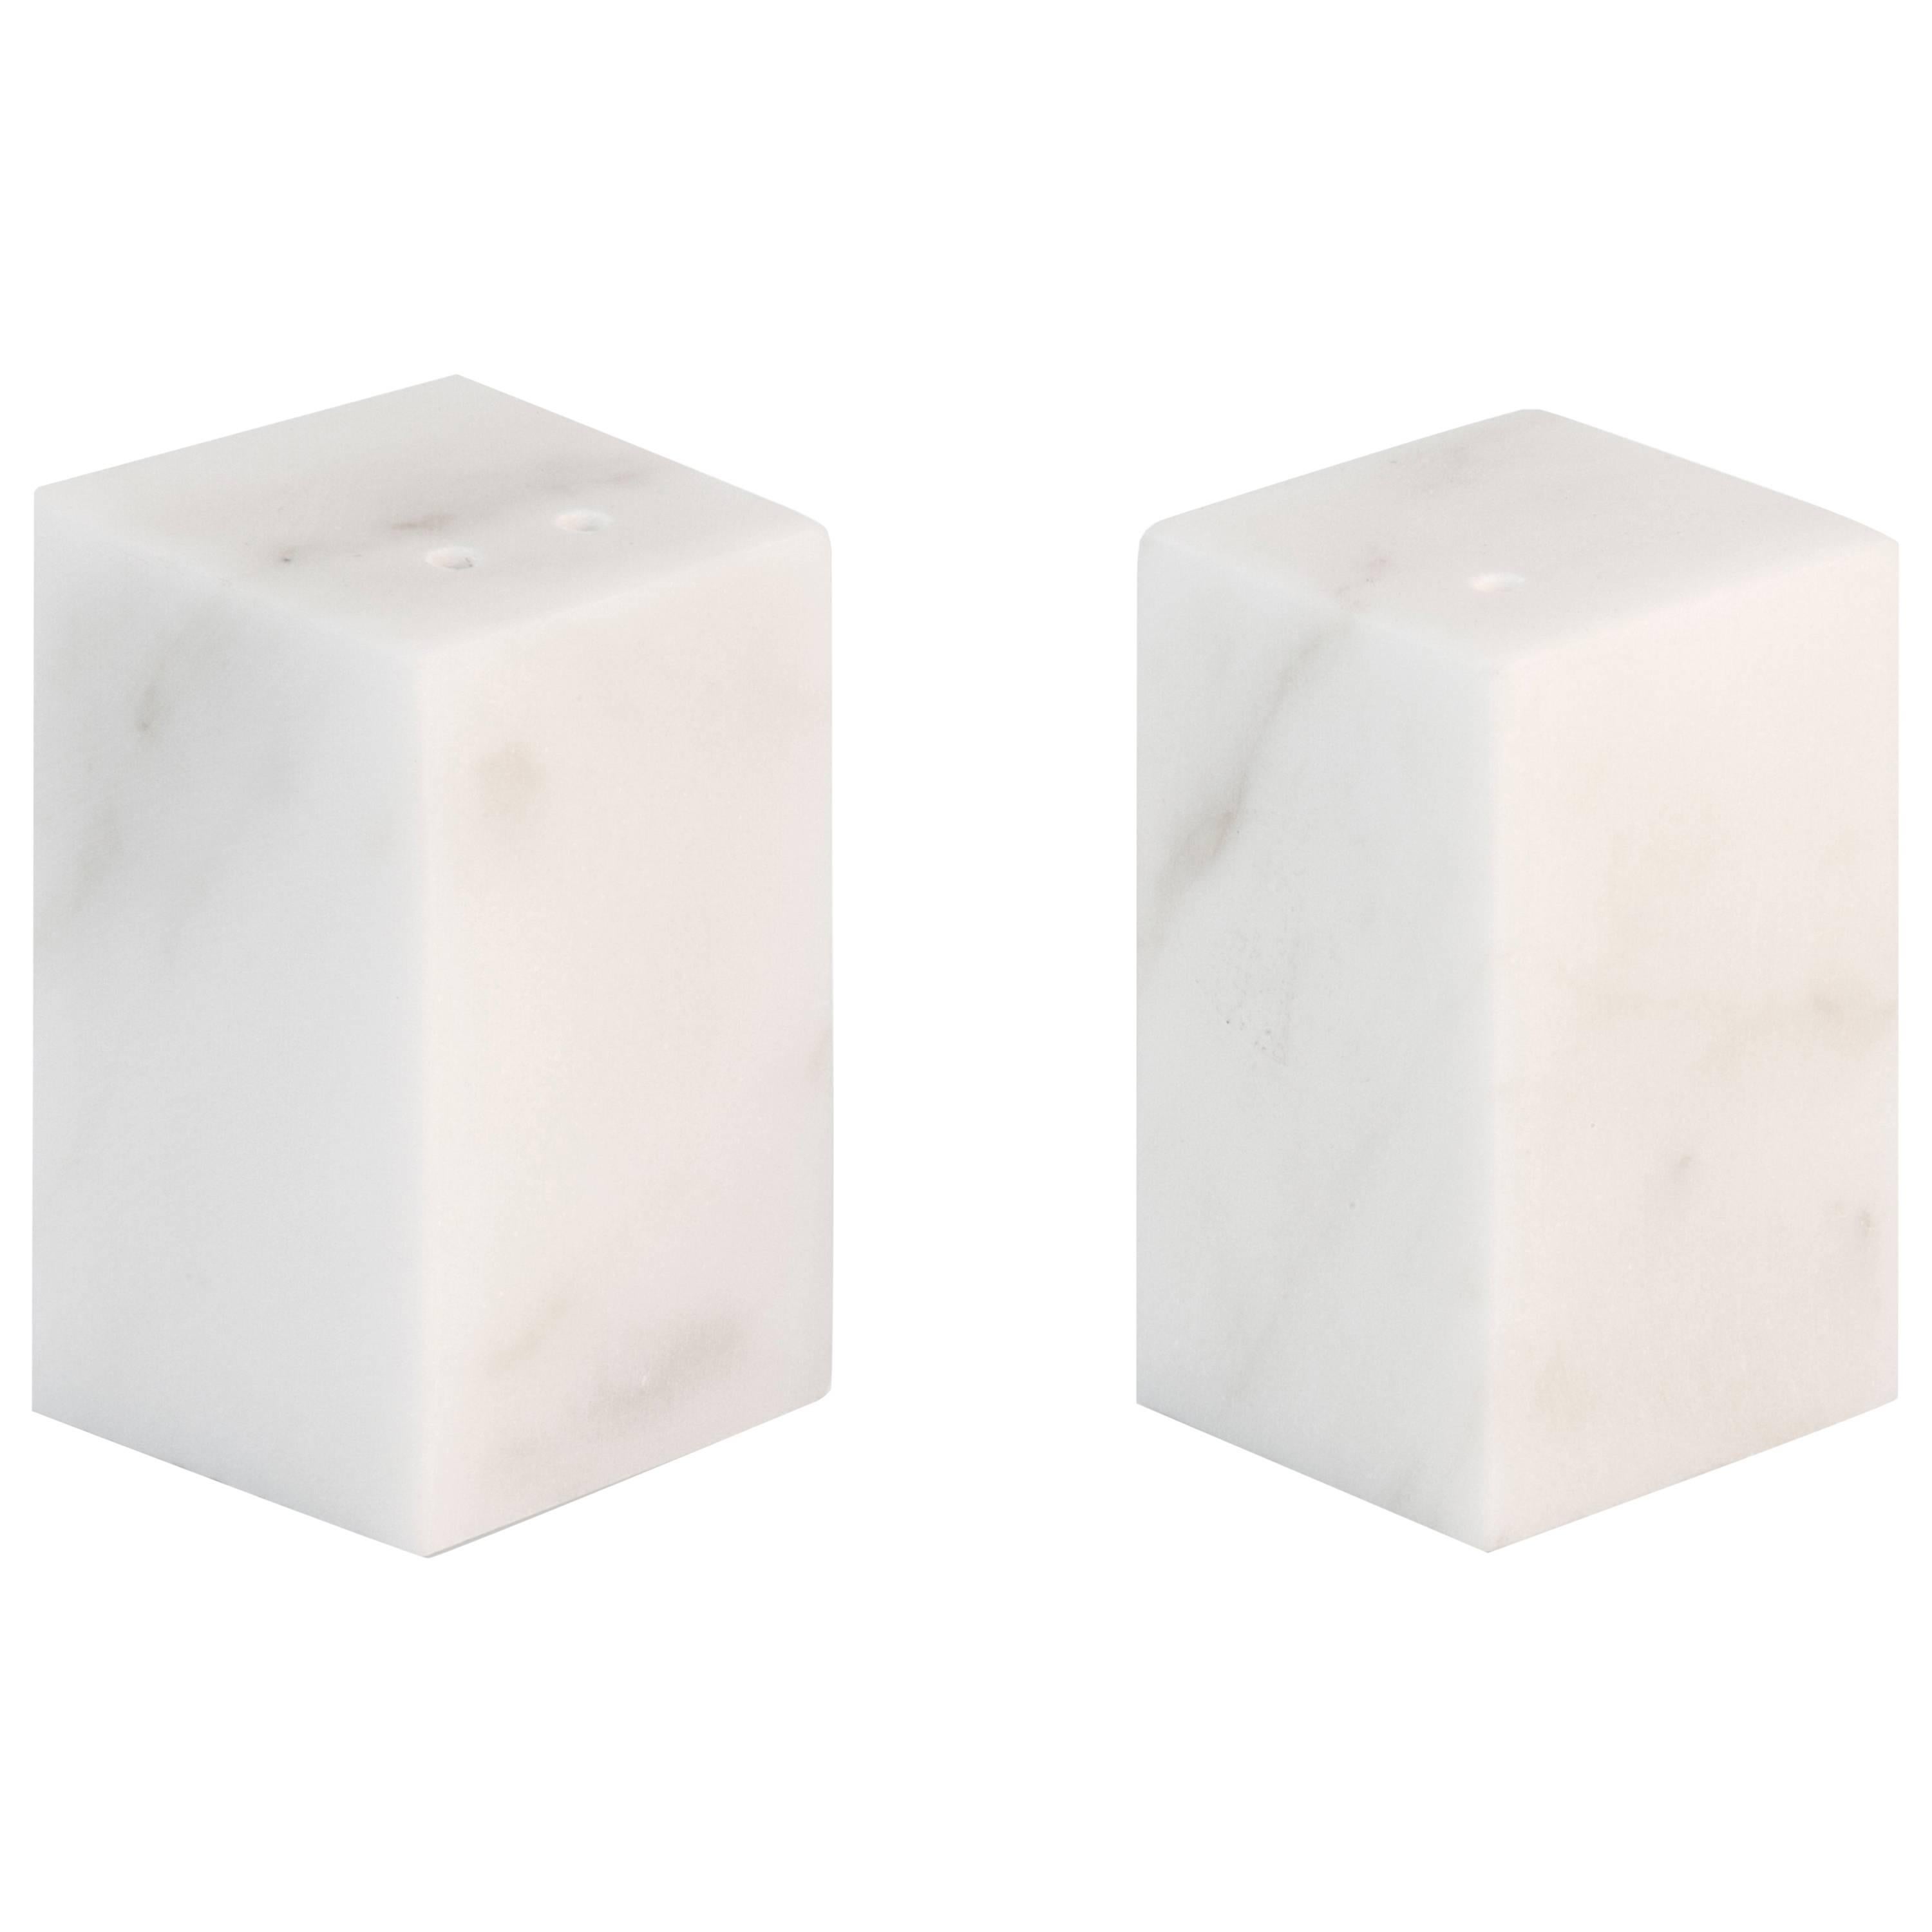 Handmade Squared Salt and Pepper Set in Satin White Carrara Marble For Sale